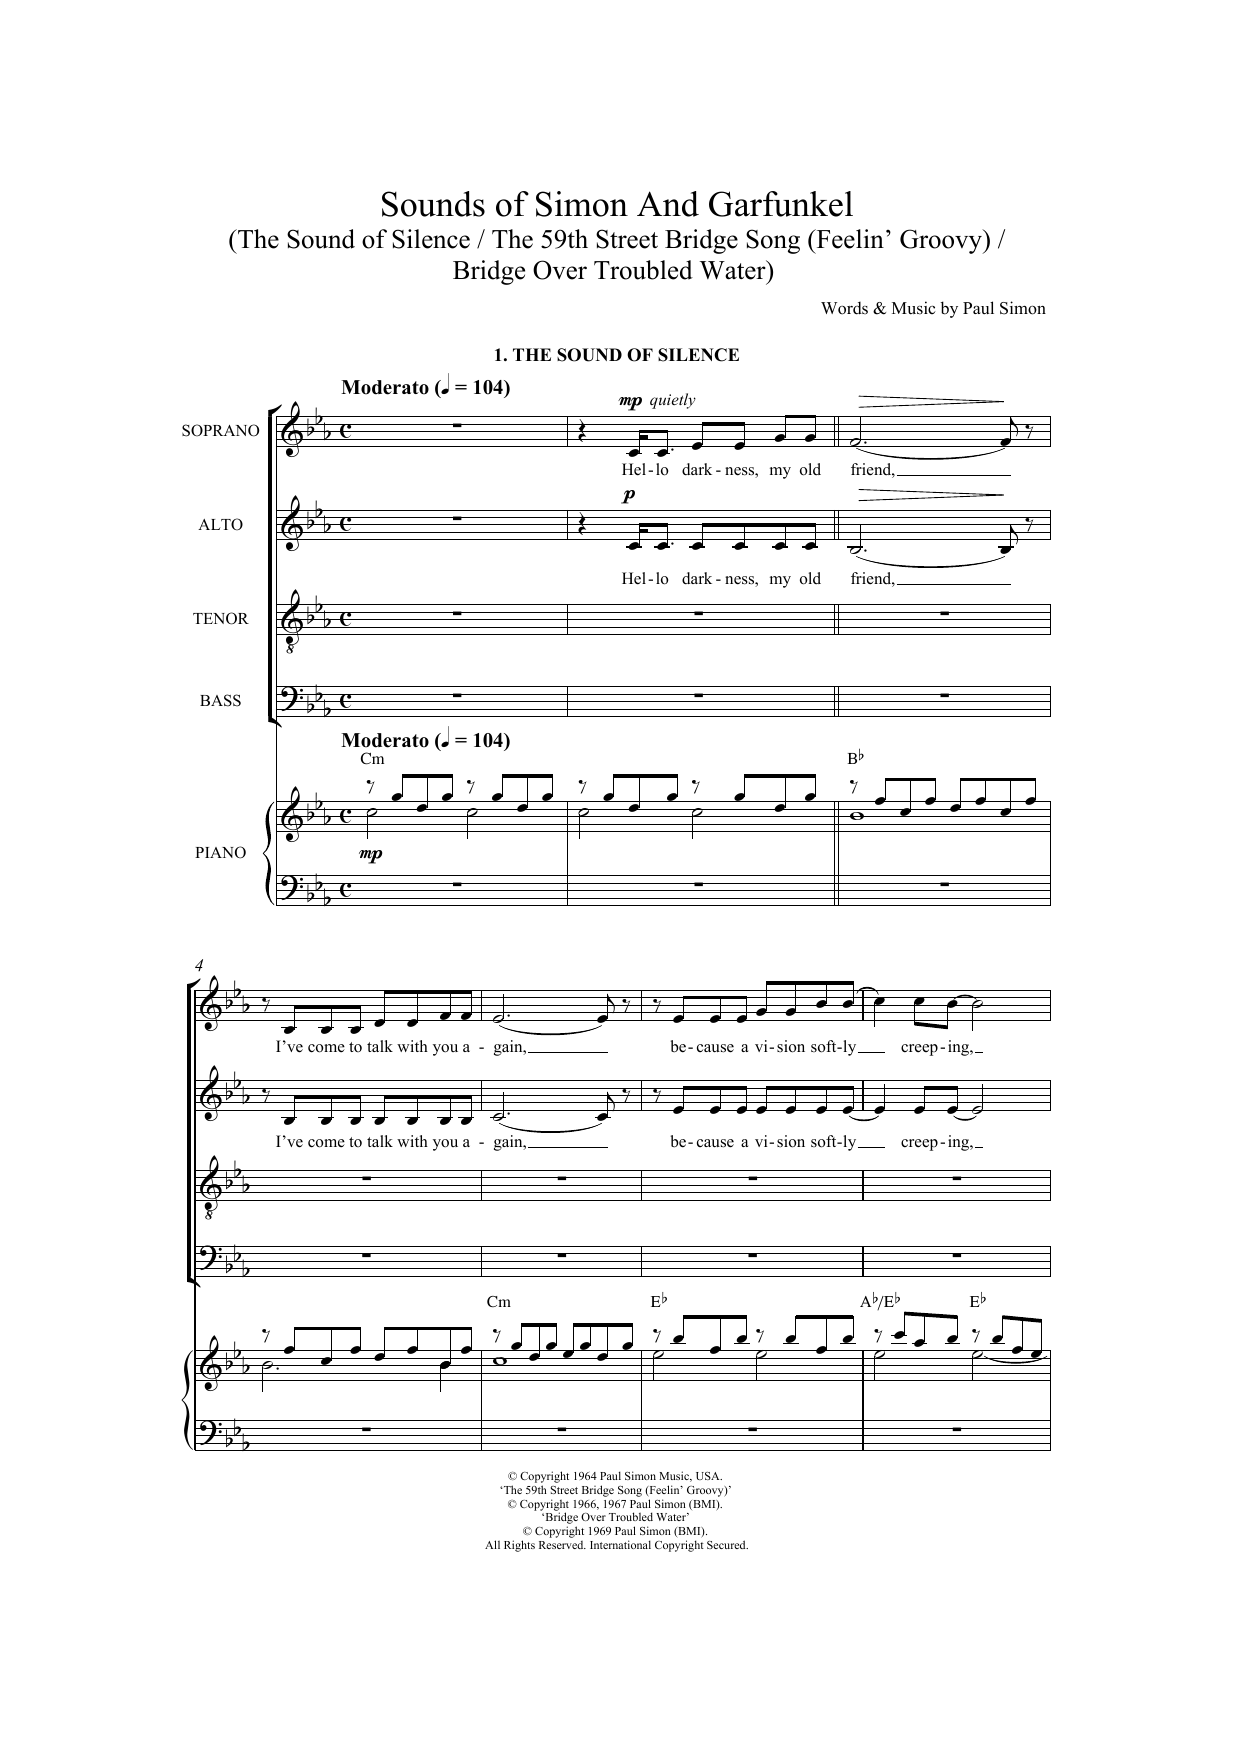 Simon & Garfunkel Sounds Of Simon & Garfunkel Sheet Music Notes & Chords for SATB - Download or Print PDF